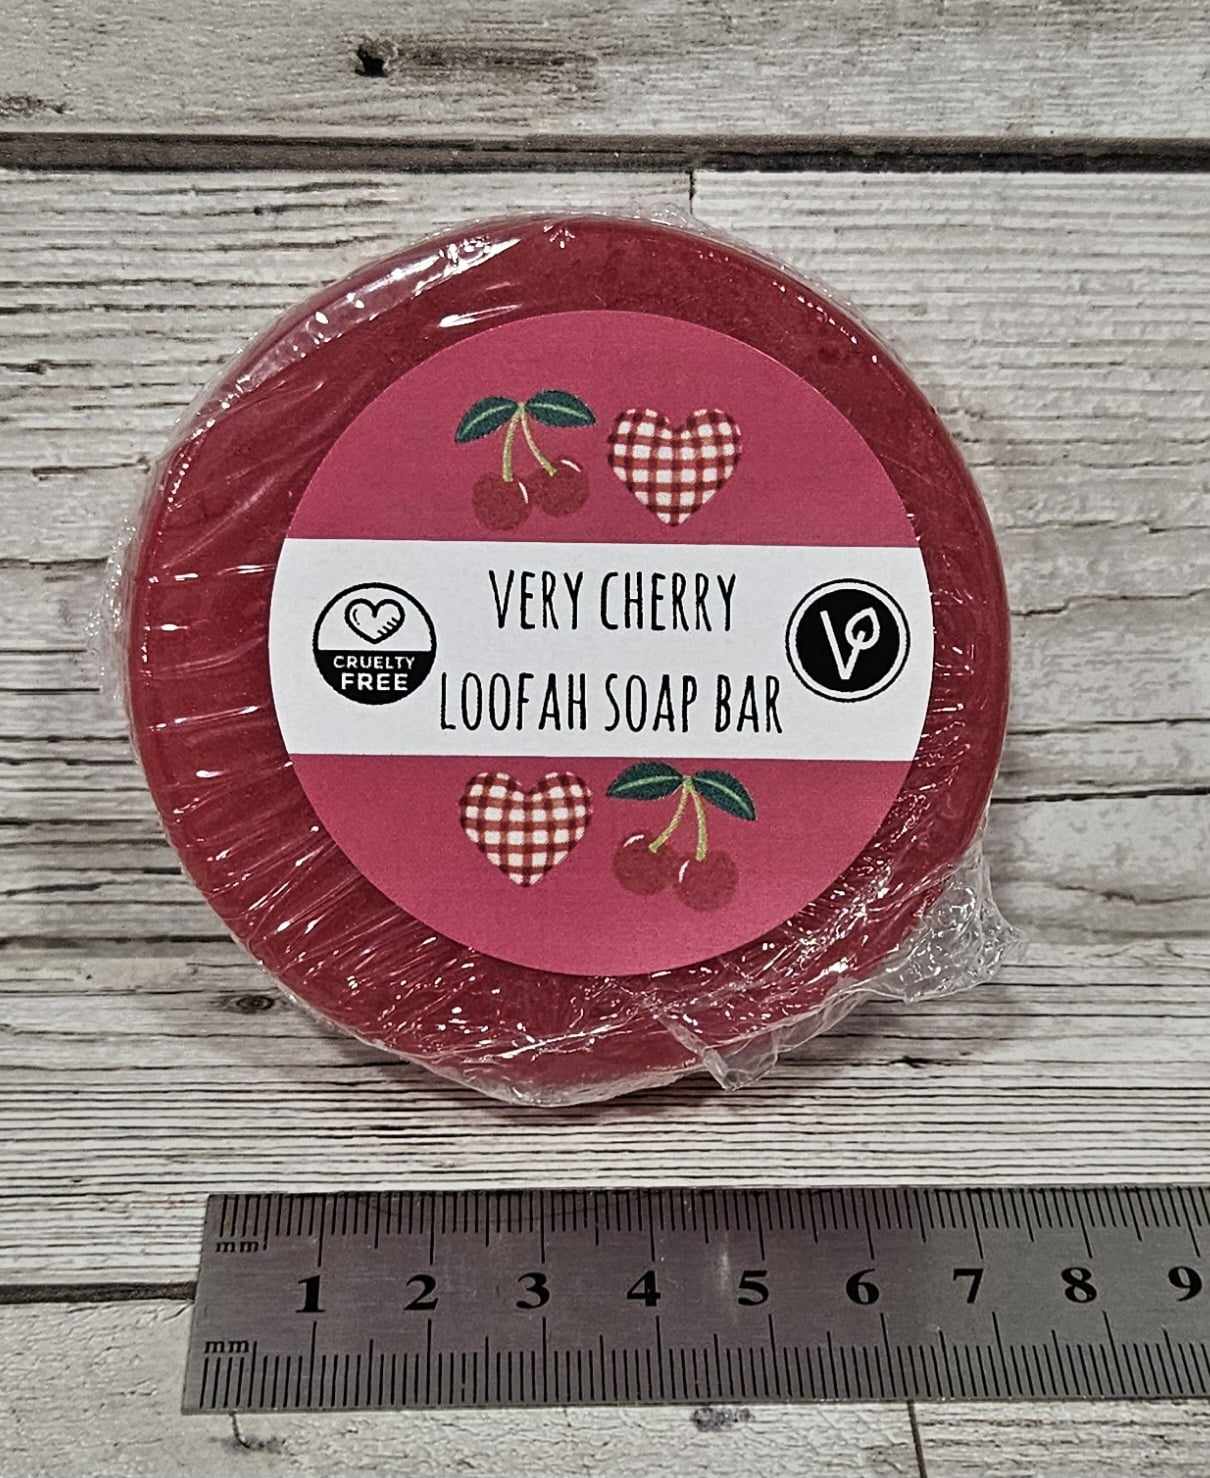 'Very cherry' Loofah Soap Bar